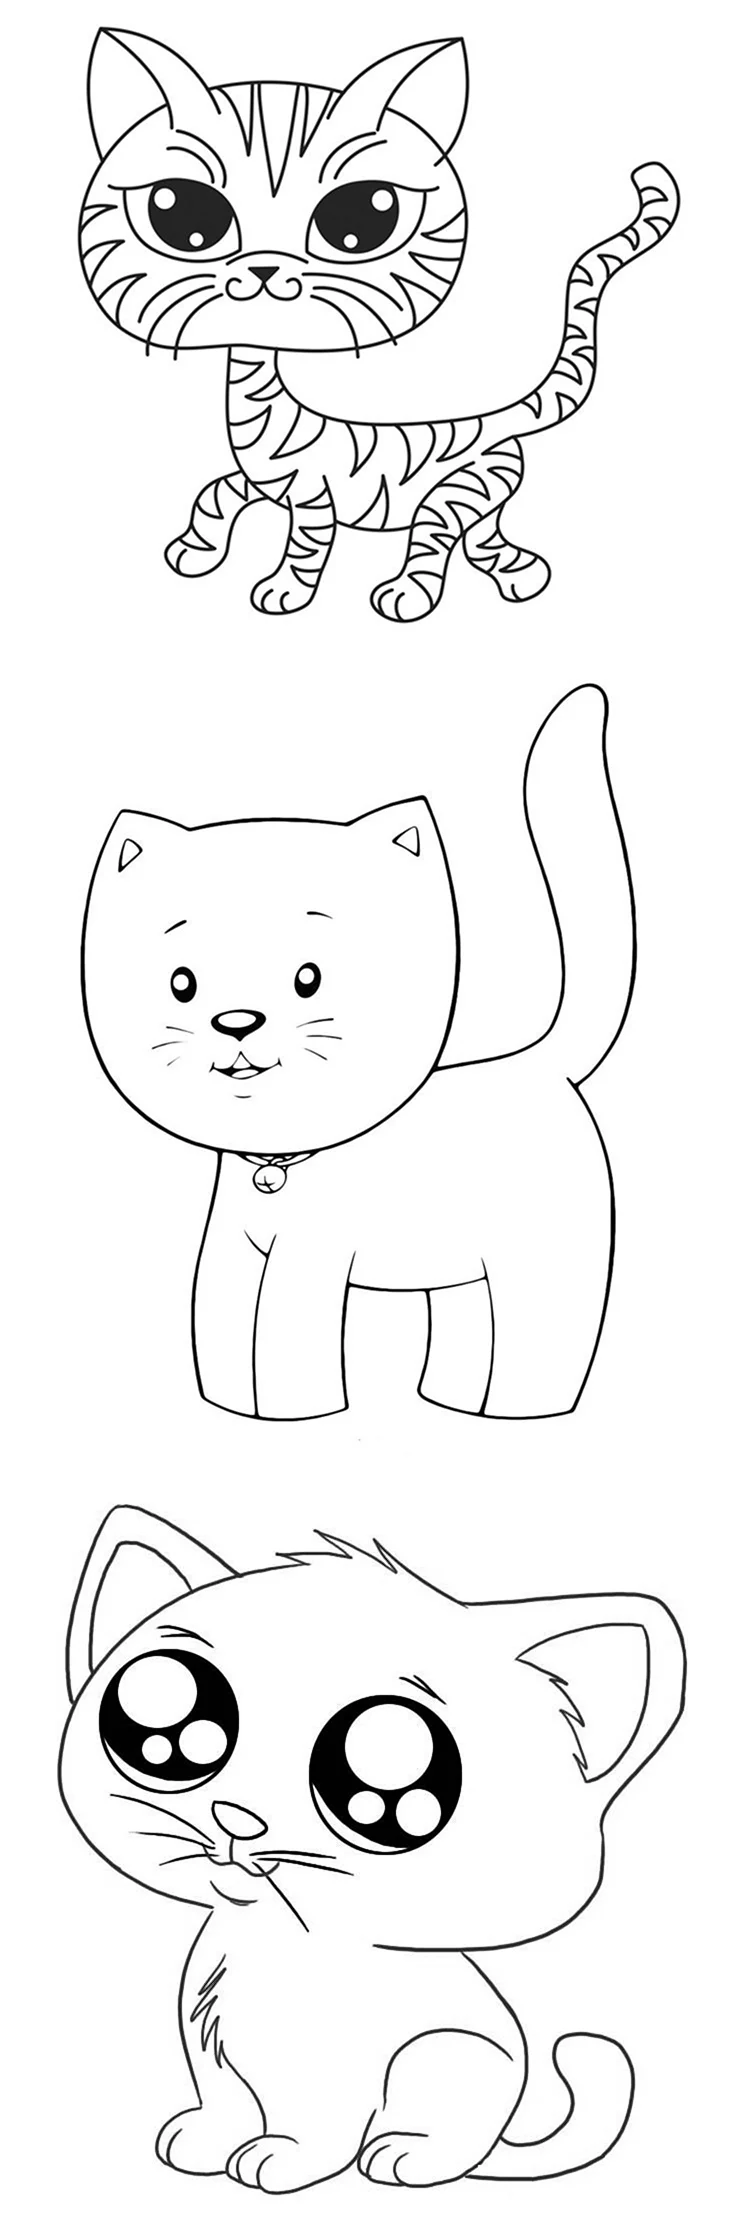 Рисунок котика для срисовки для детей. Для срисовки